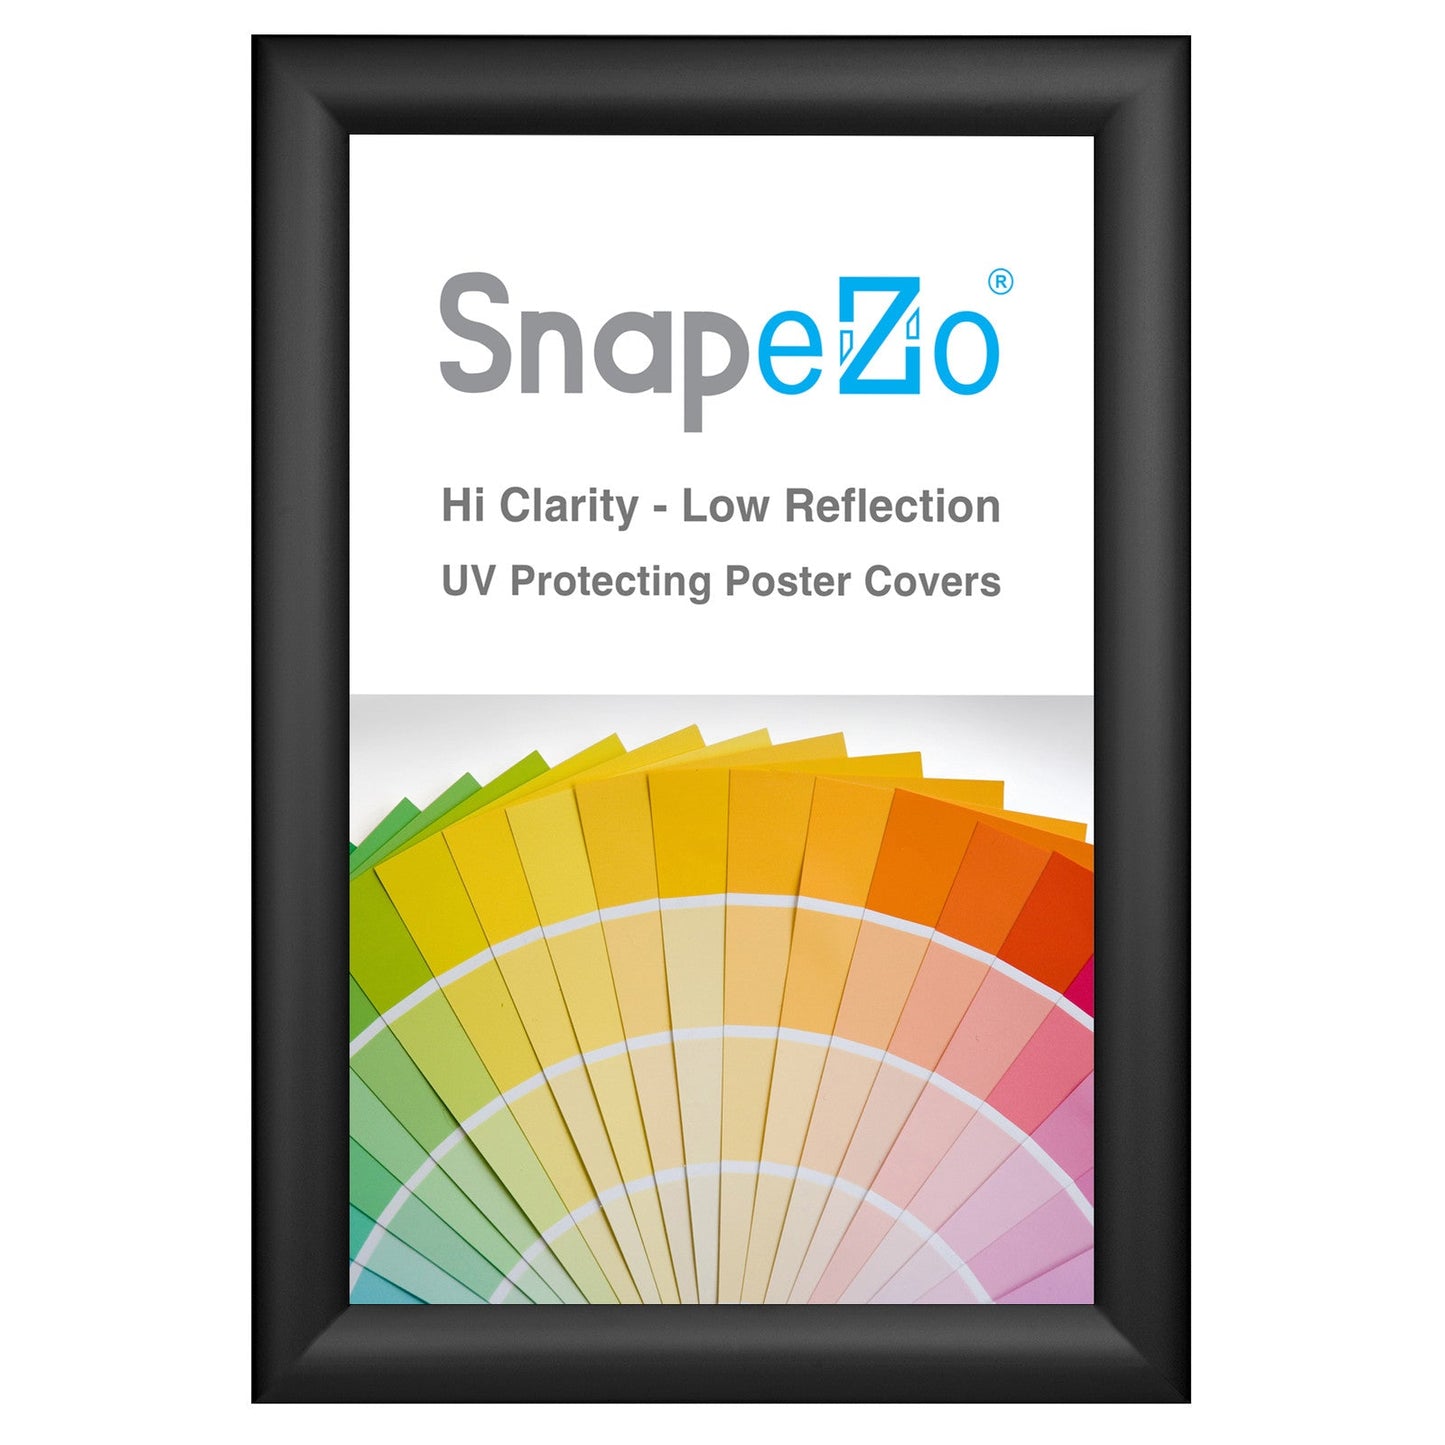 10x15 Black SnapeZo® Snap Frame - 1.2" Profile